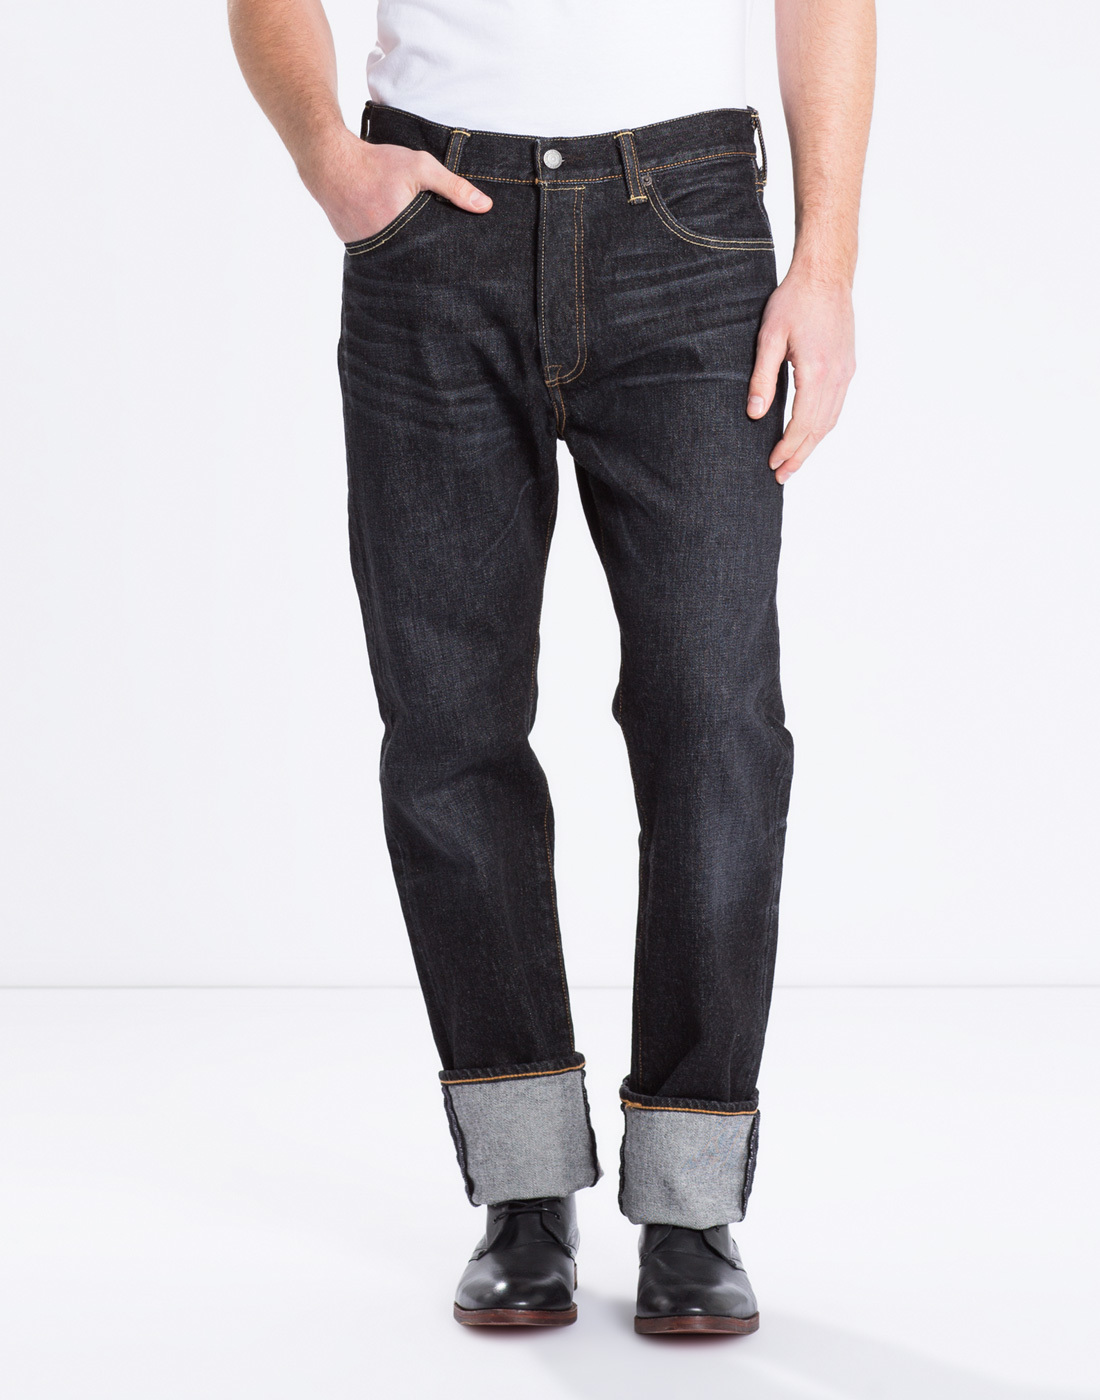 LEVI'S® 501 Retro Mod Original Fit Straight Jeans Harris Black